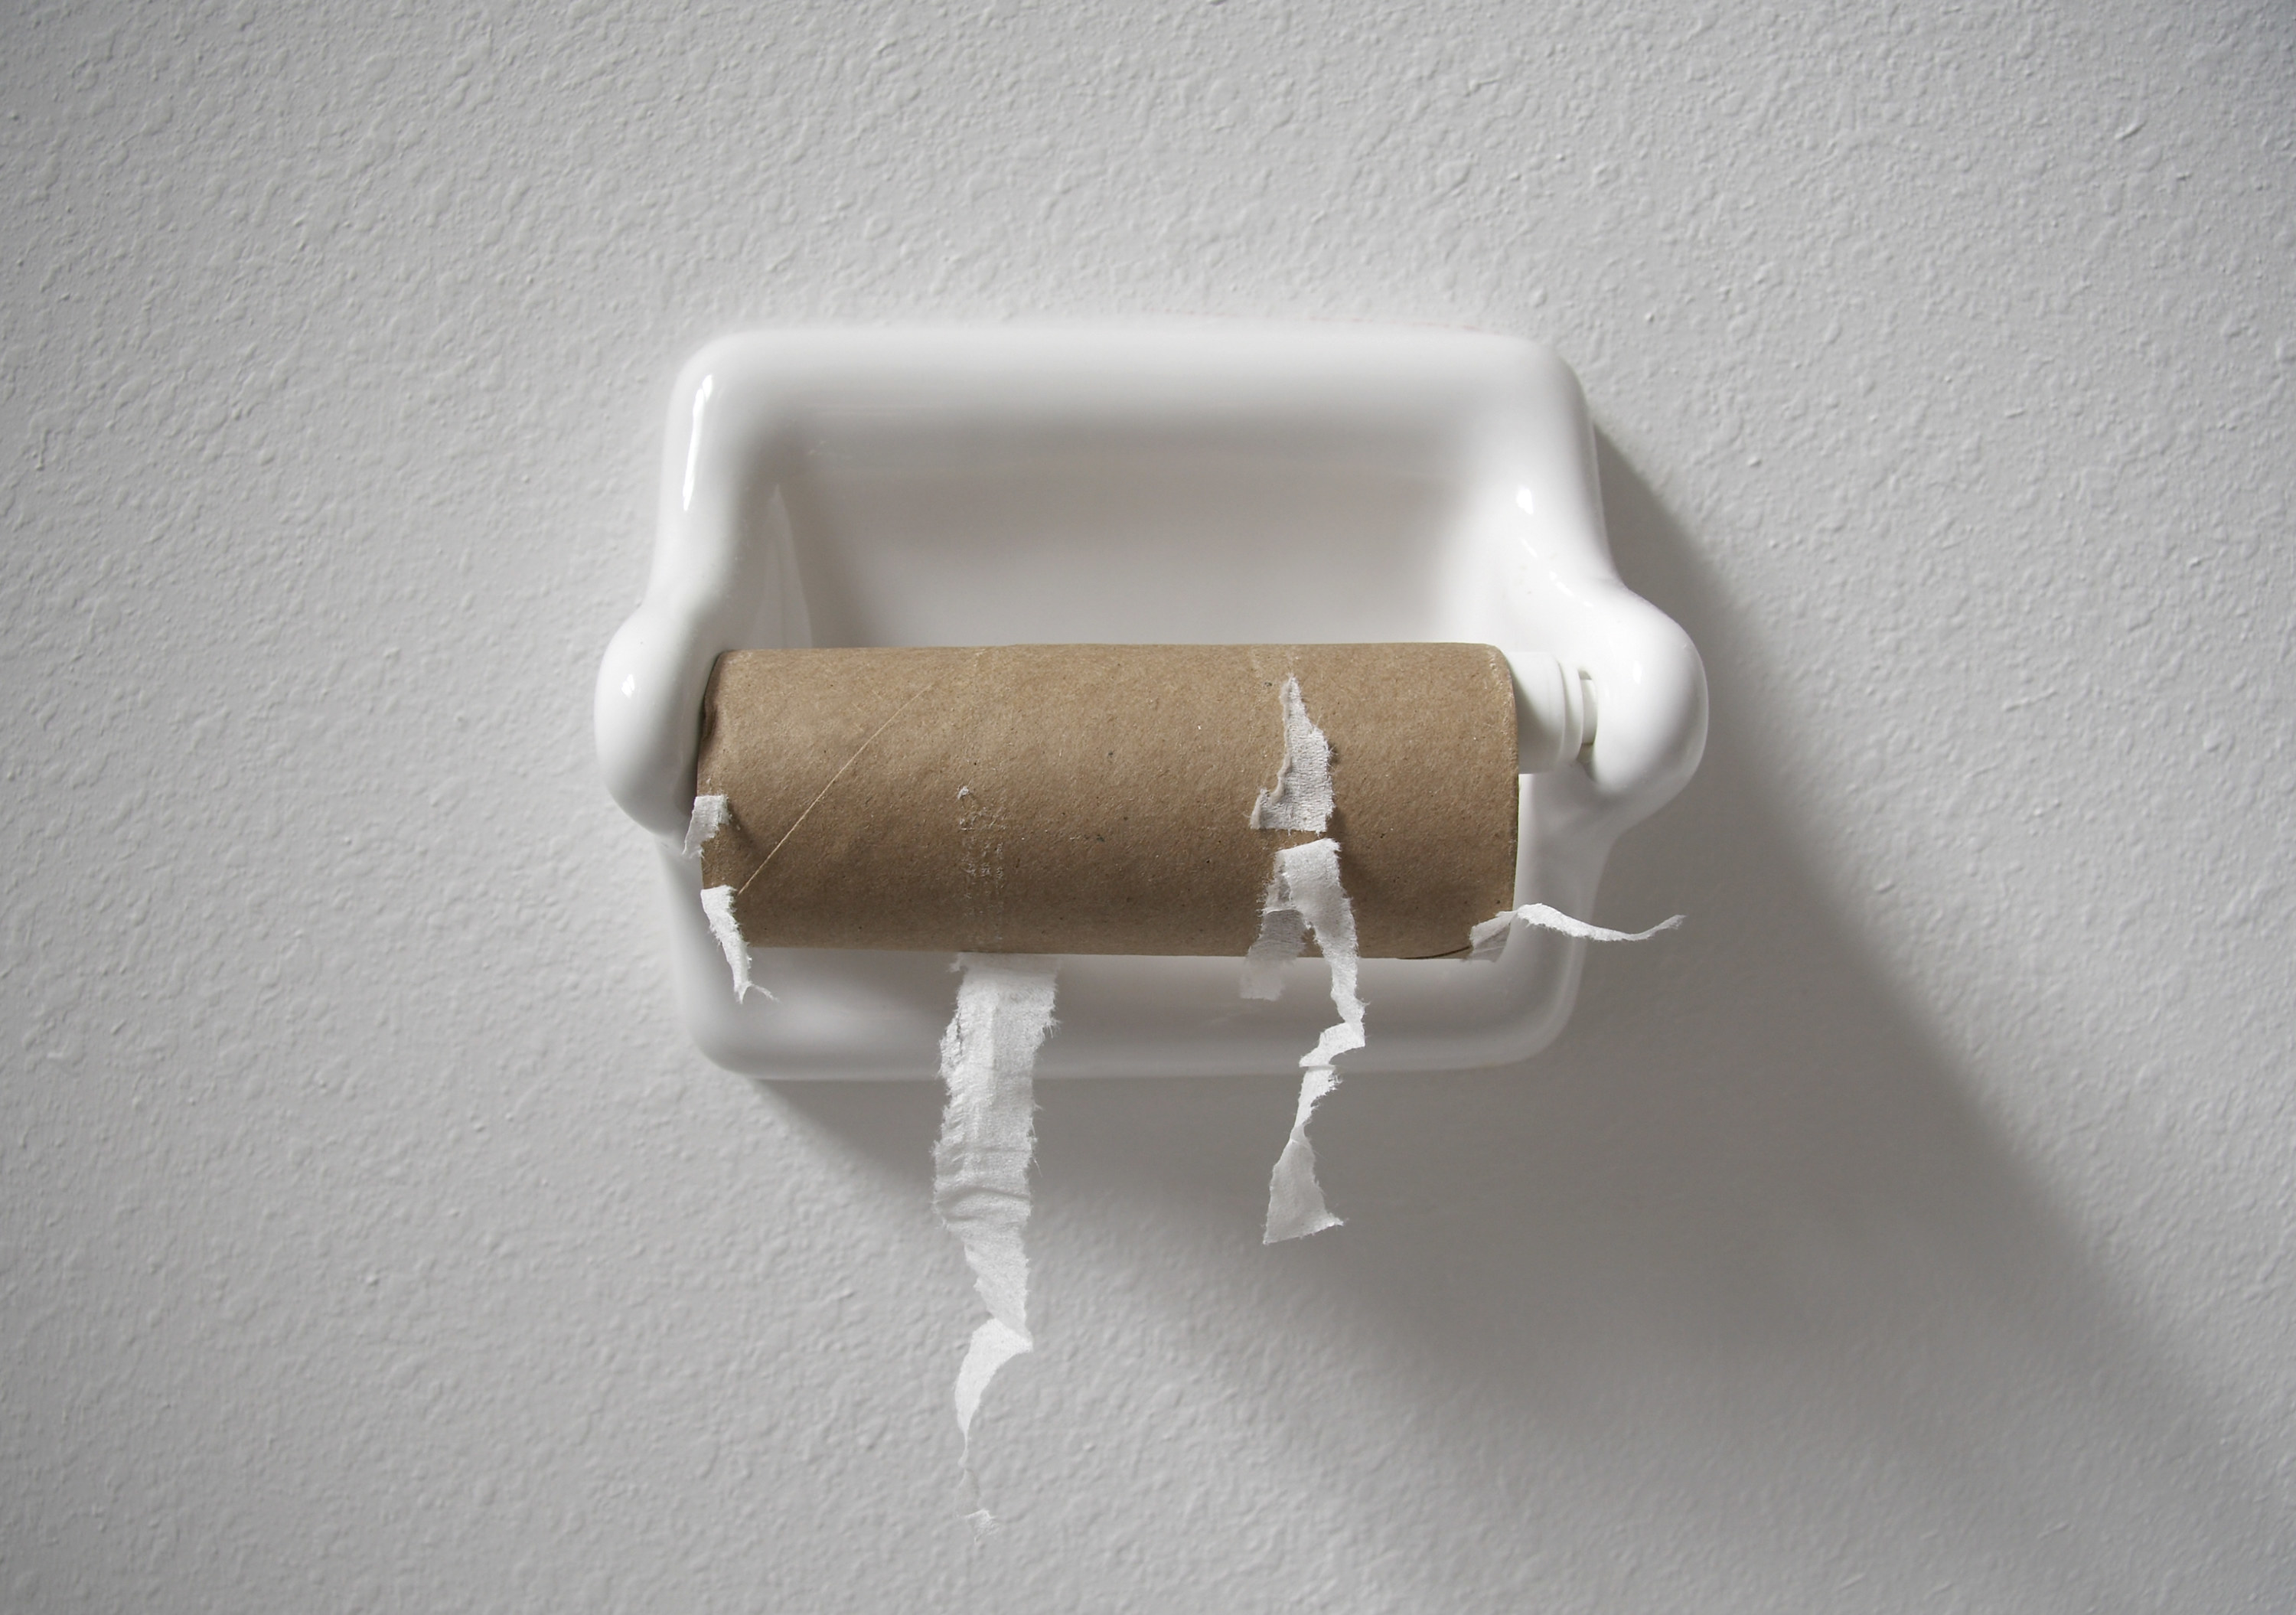 An empty toilet paper roll. 